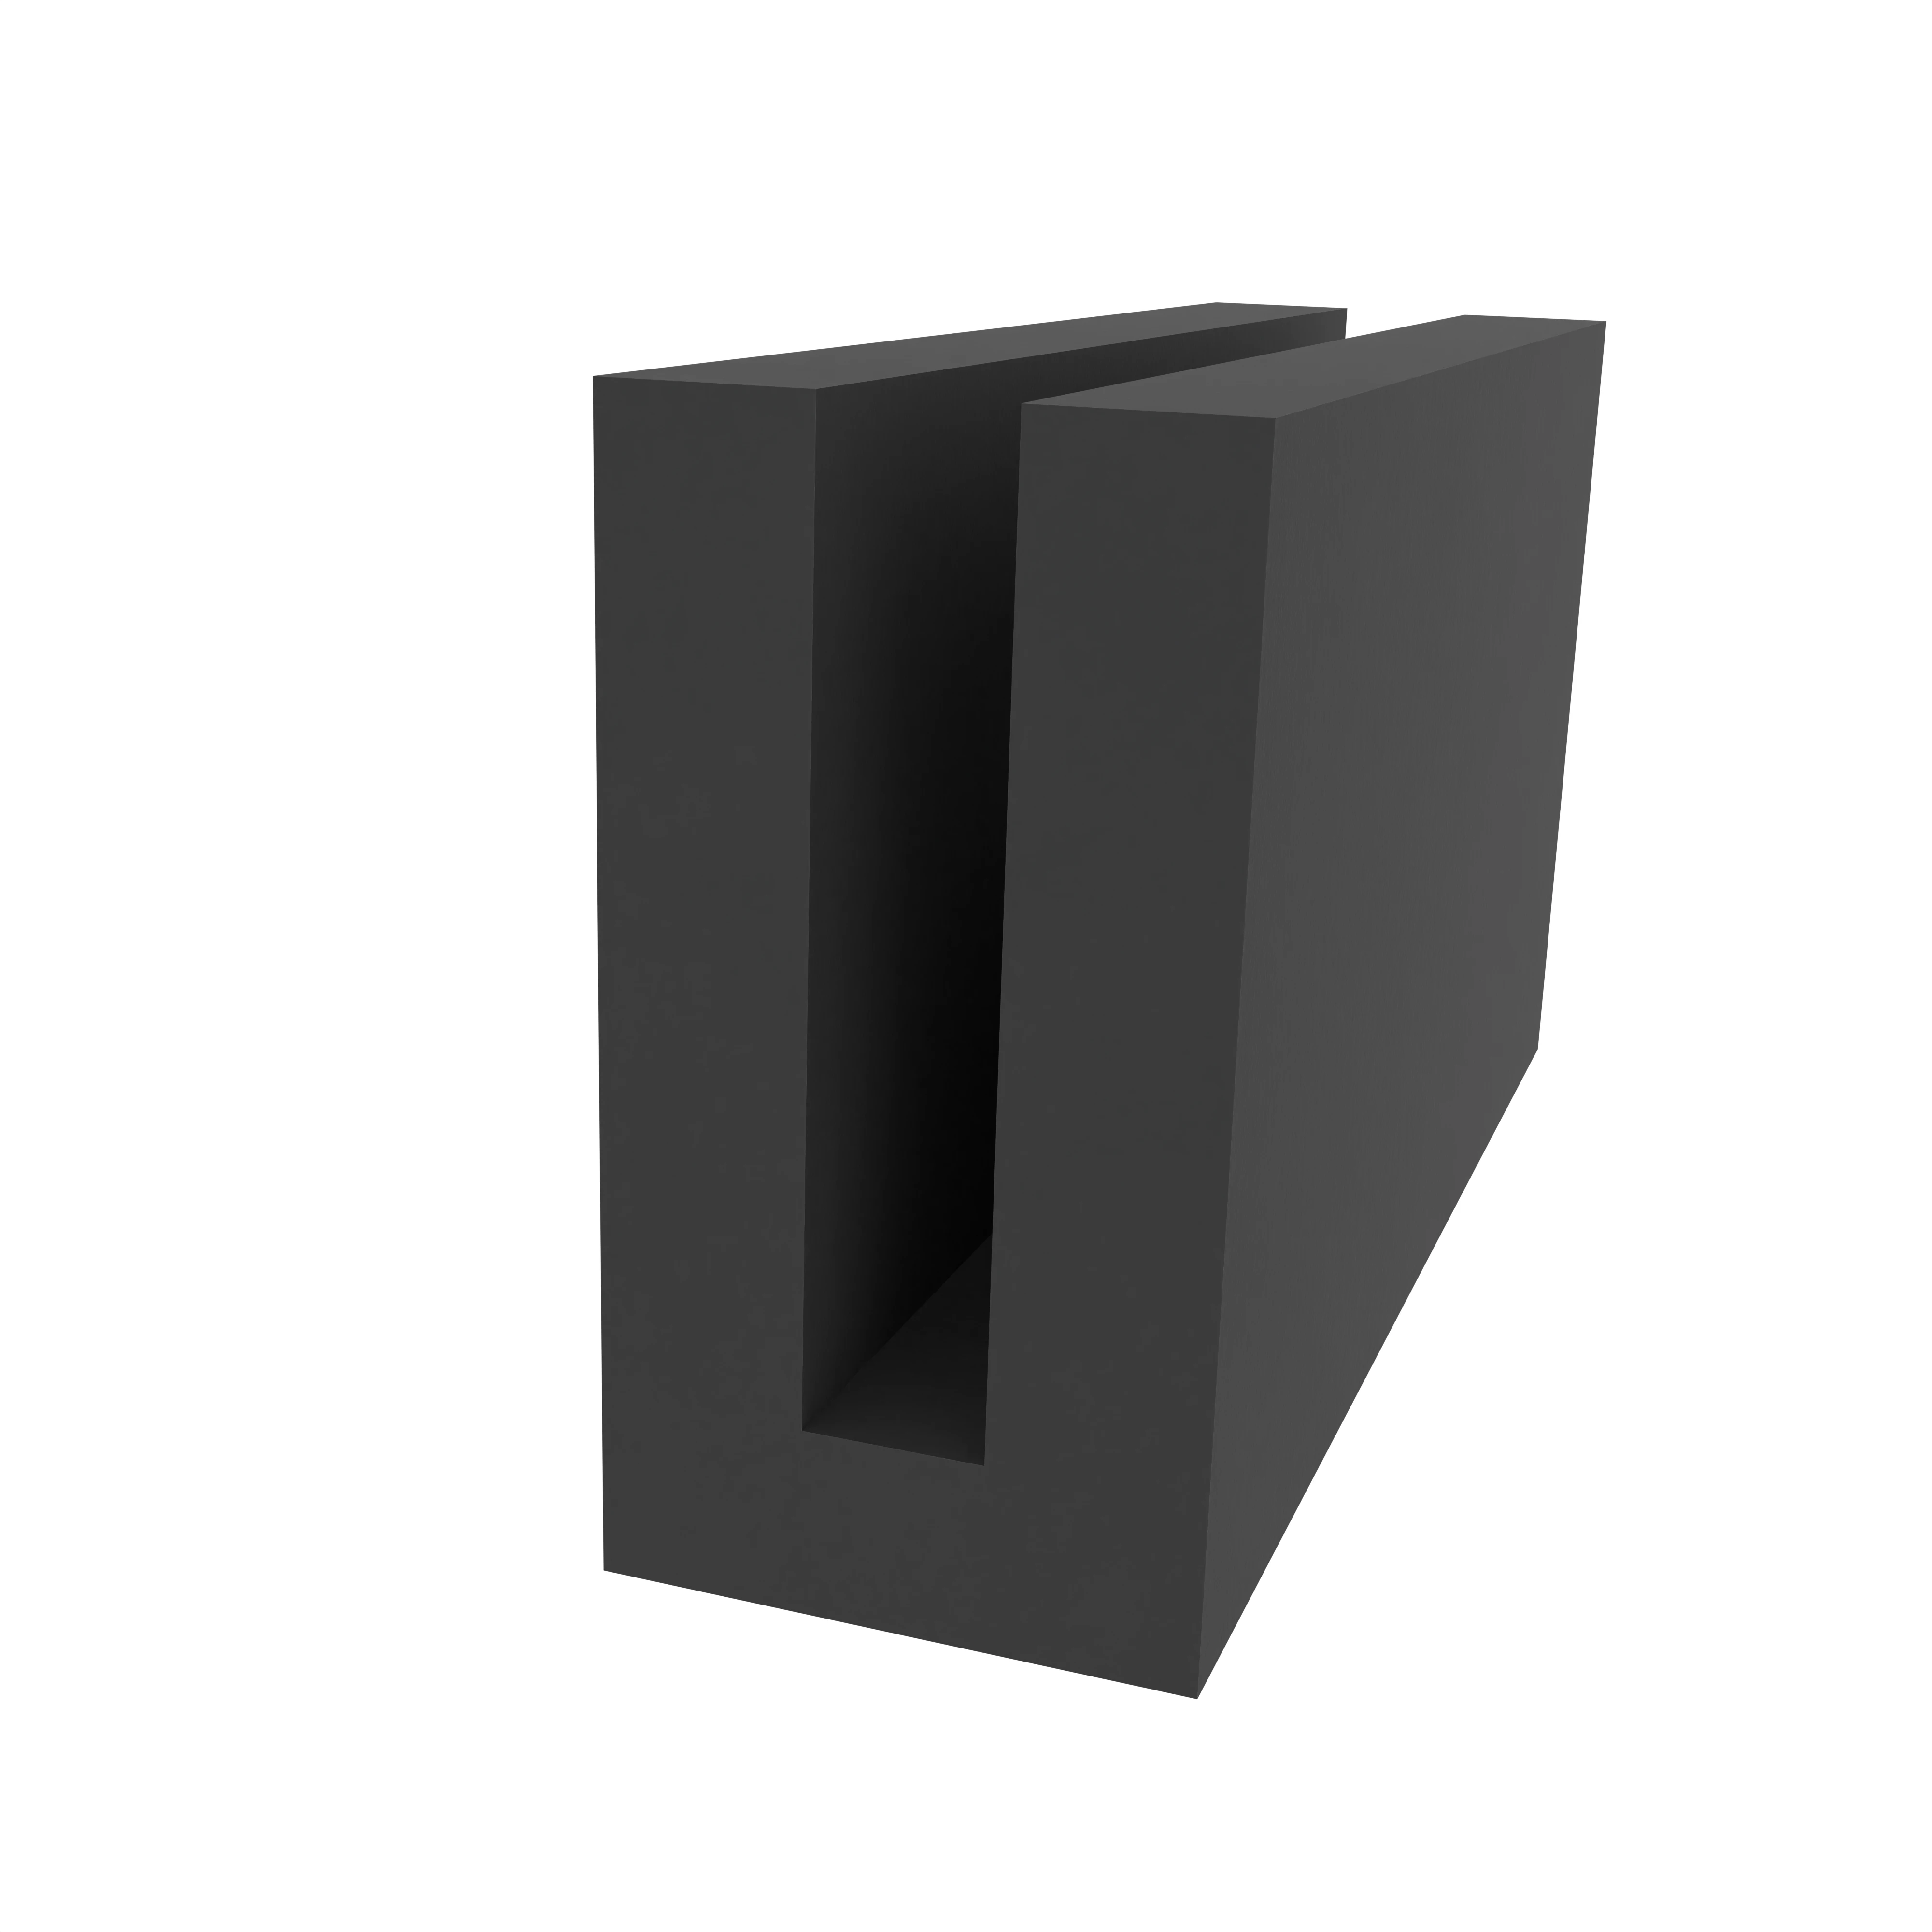 Kantenschutzprofil | Höhe: 9,5 mm | Farbe: schwarz